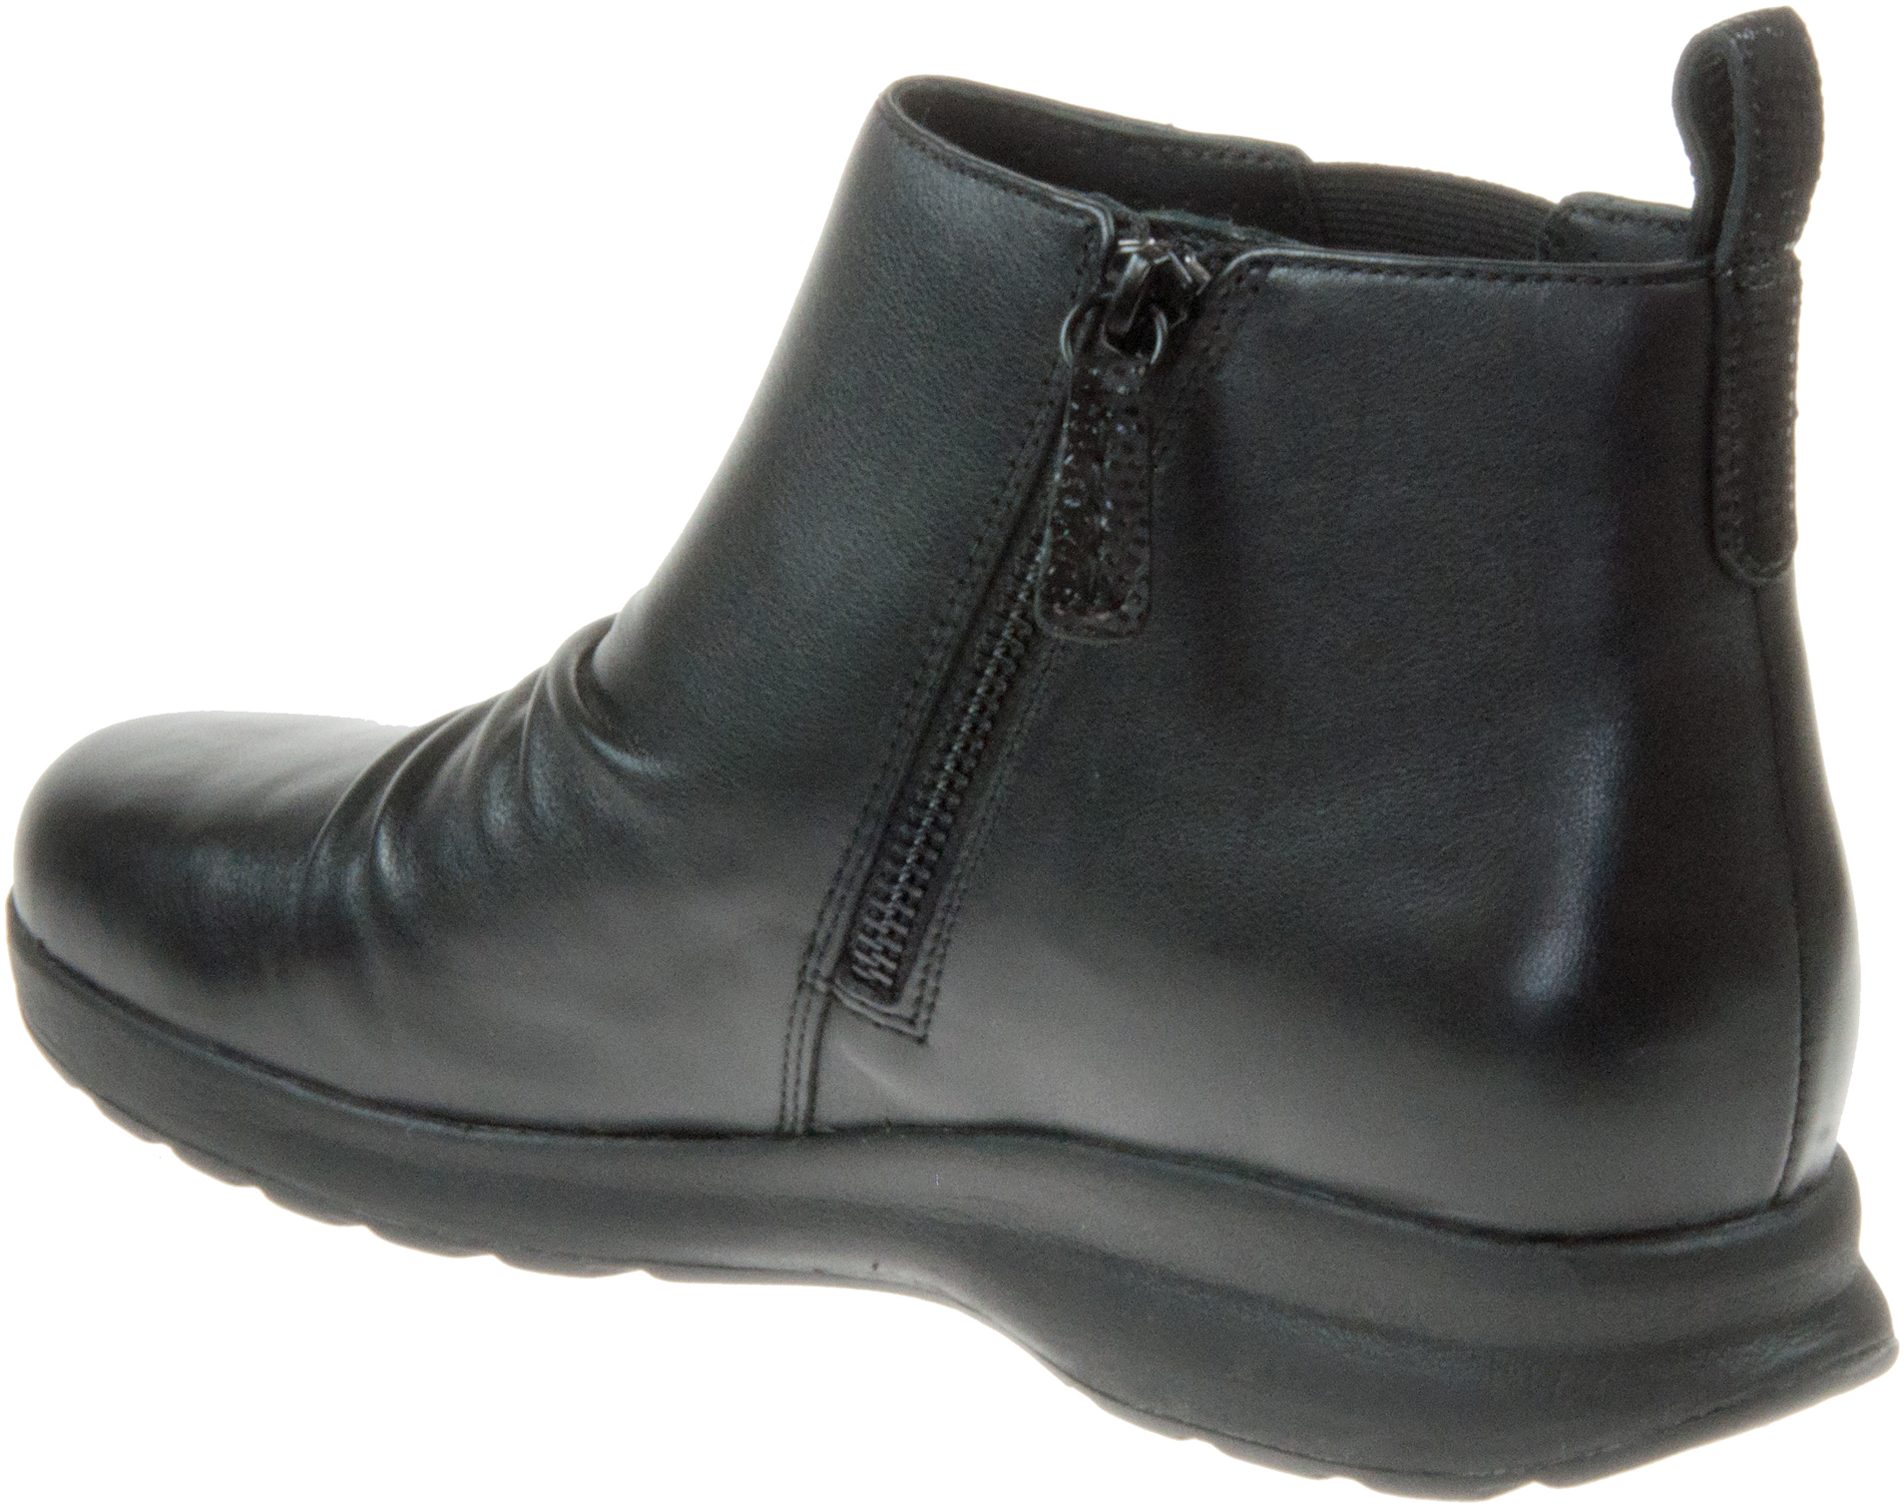 Clarks Un Adorn Mid Black Leather 26136847 - Ankle Boots - Humphries Shoes